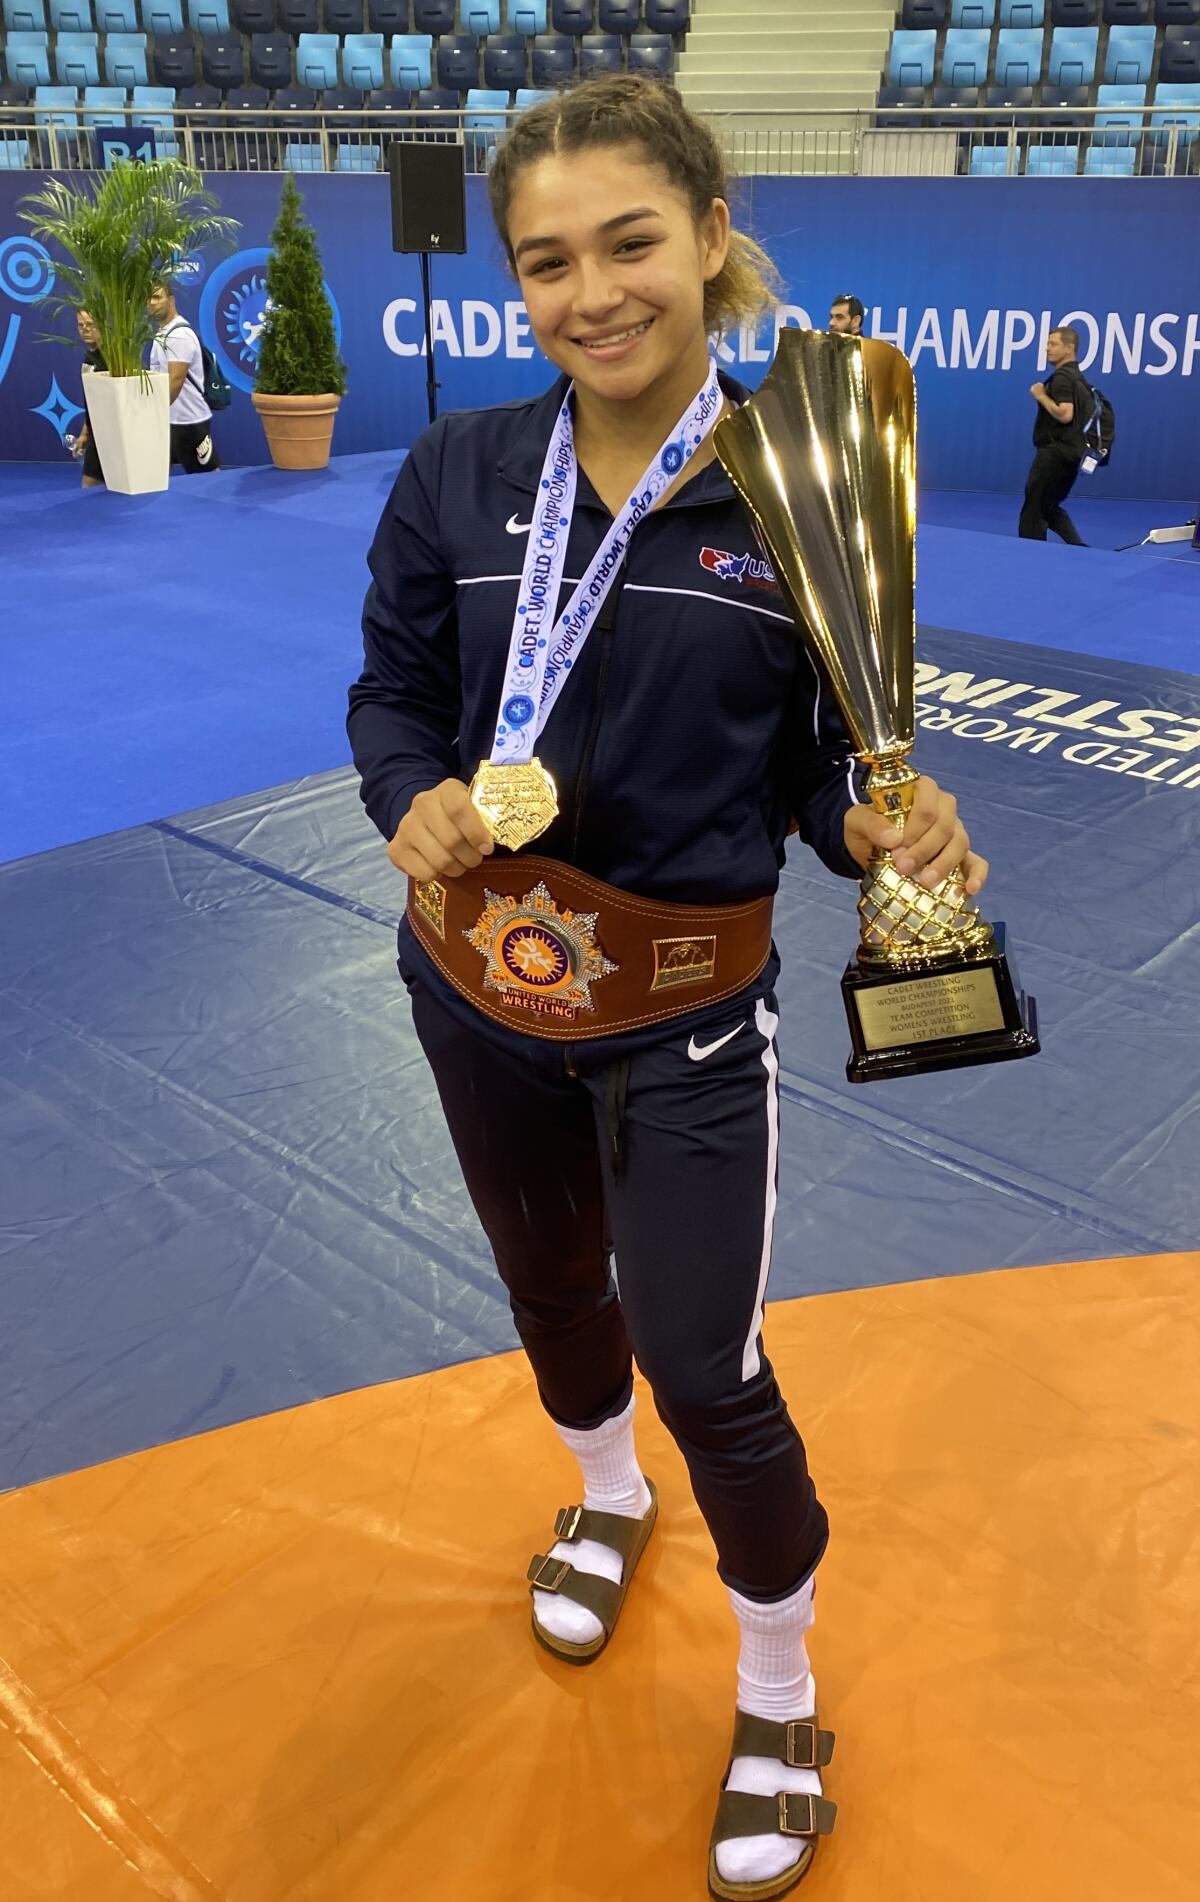 Katie Gomez of Birmingham High won the U16 Cadet freestyle world championship in wrestling in Budapest, Hungary.